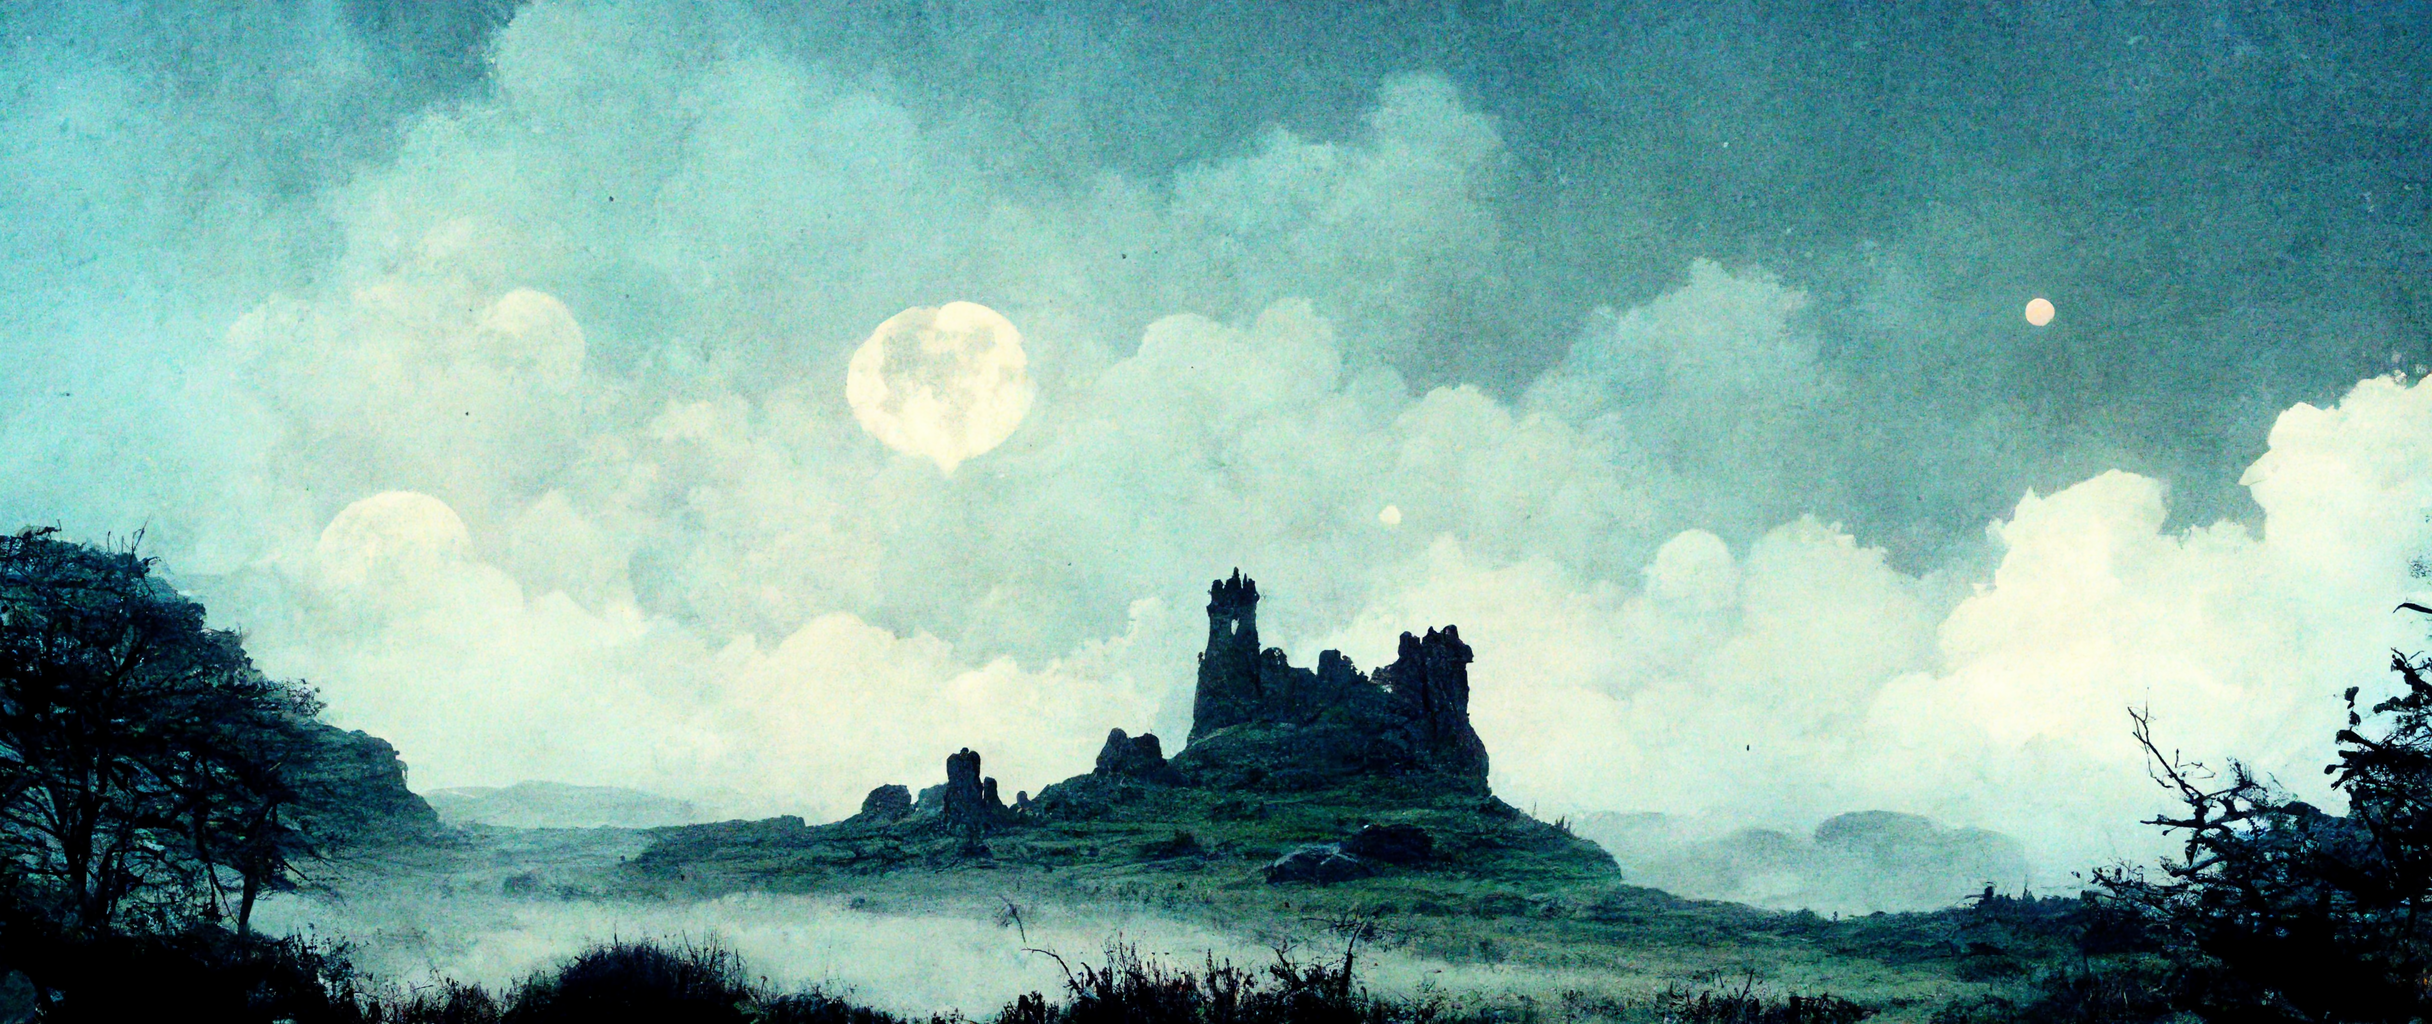 vibe_misty_moors_Dartmoor_monsters_werewolves_full_moon_night_m_b56c7a7a-4722-46e4-8201-5760344a0161